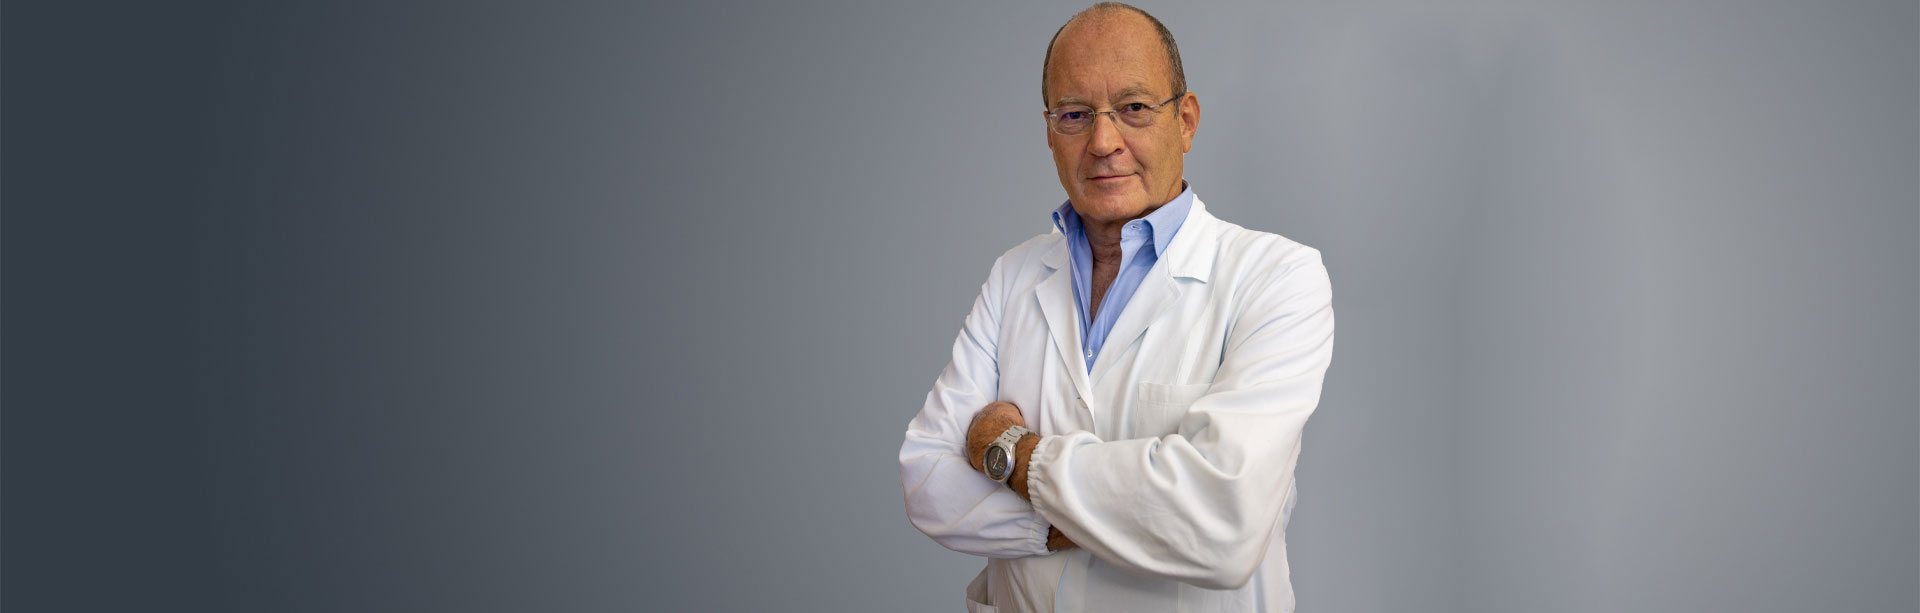 Dr. Daniele Riccardo Meregaglia